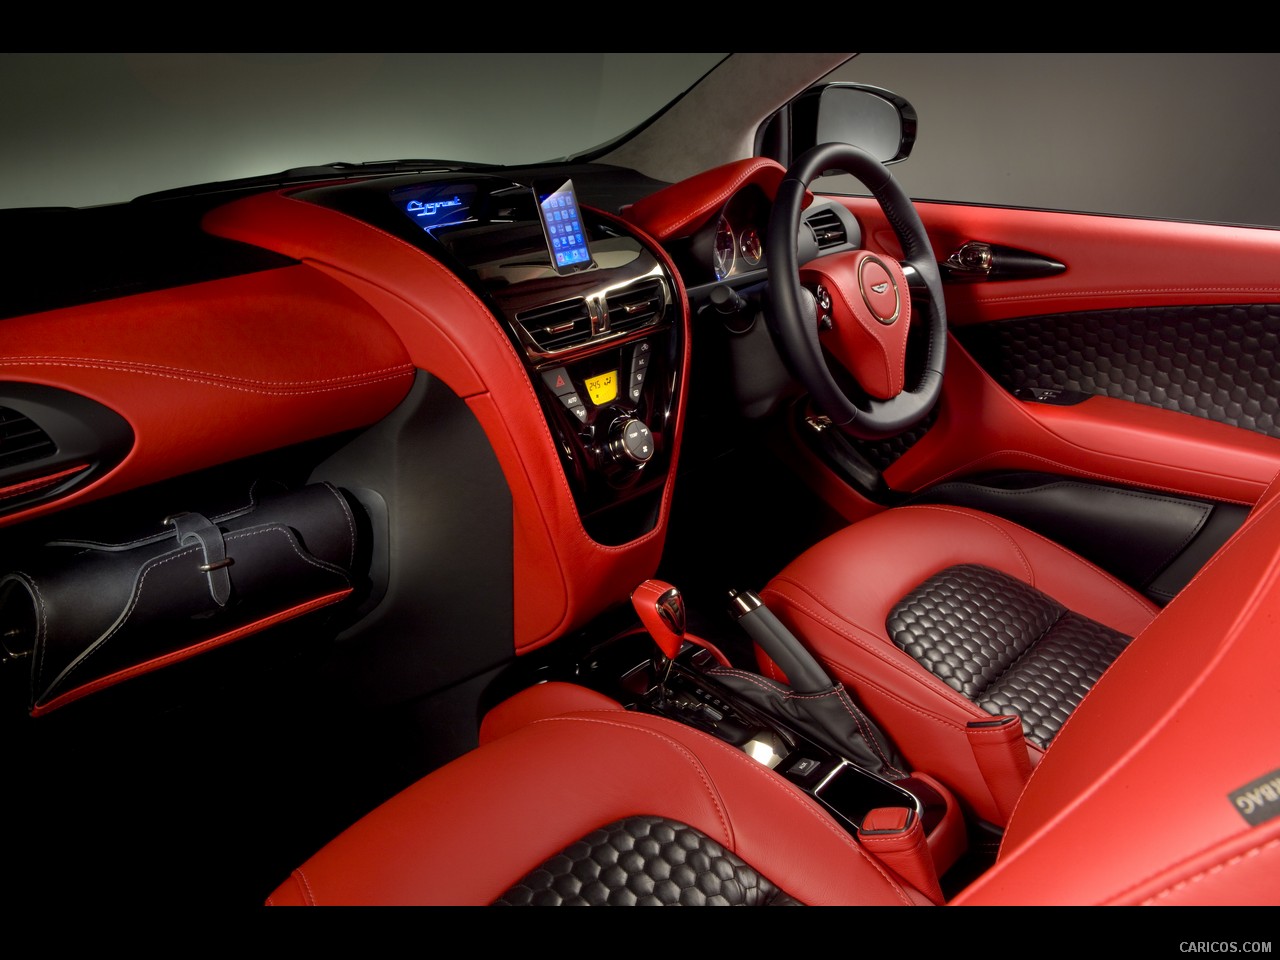 2010 Aston Martin Cygnet Concept - Interior View, 1280x960, #6 of 14